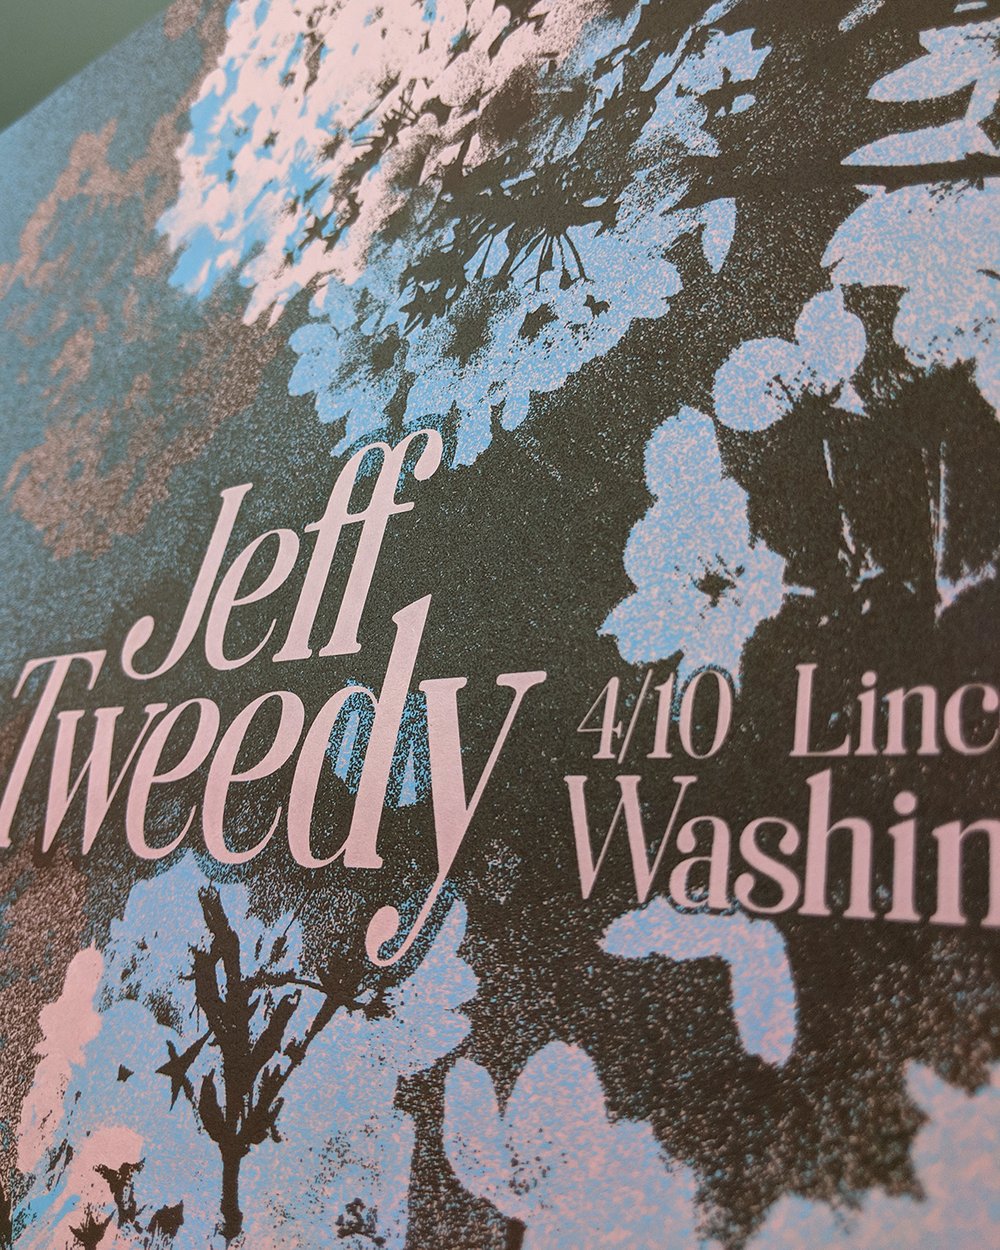 Jeff Tweedy, Washington, DC